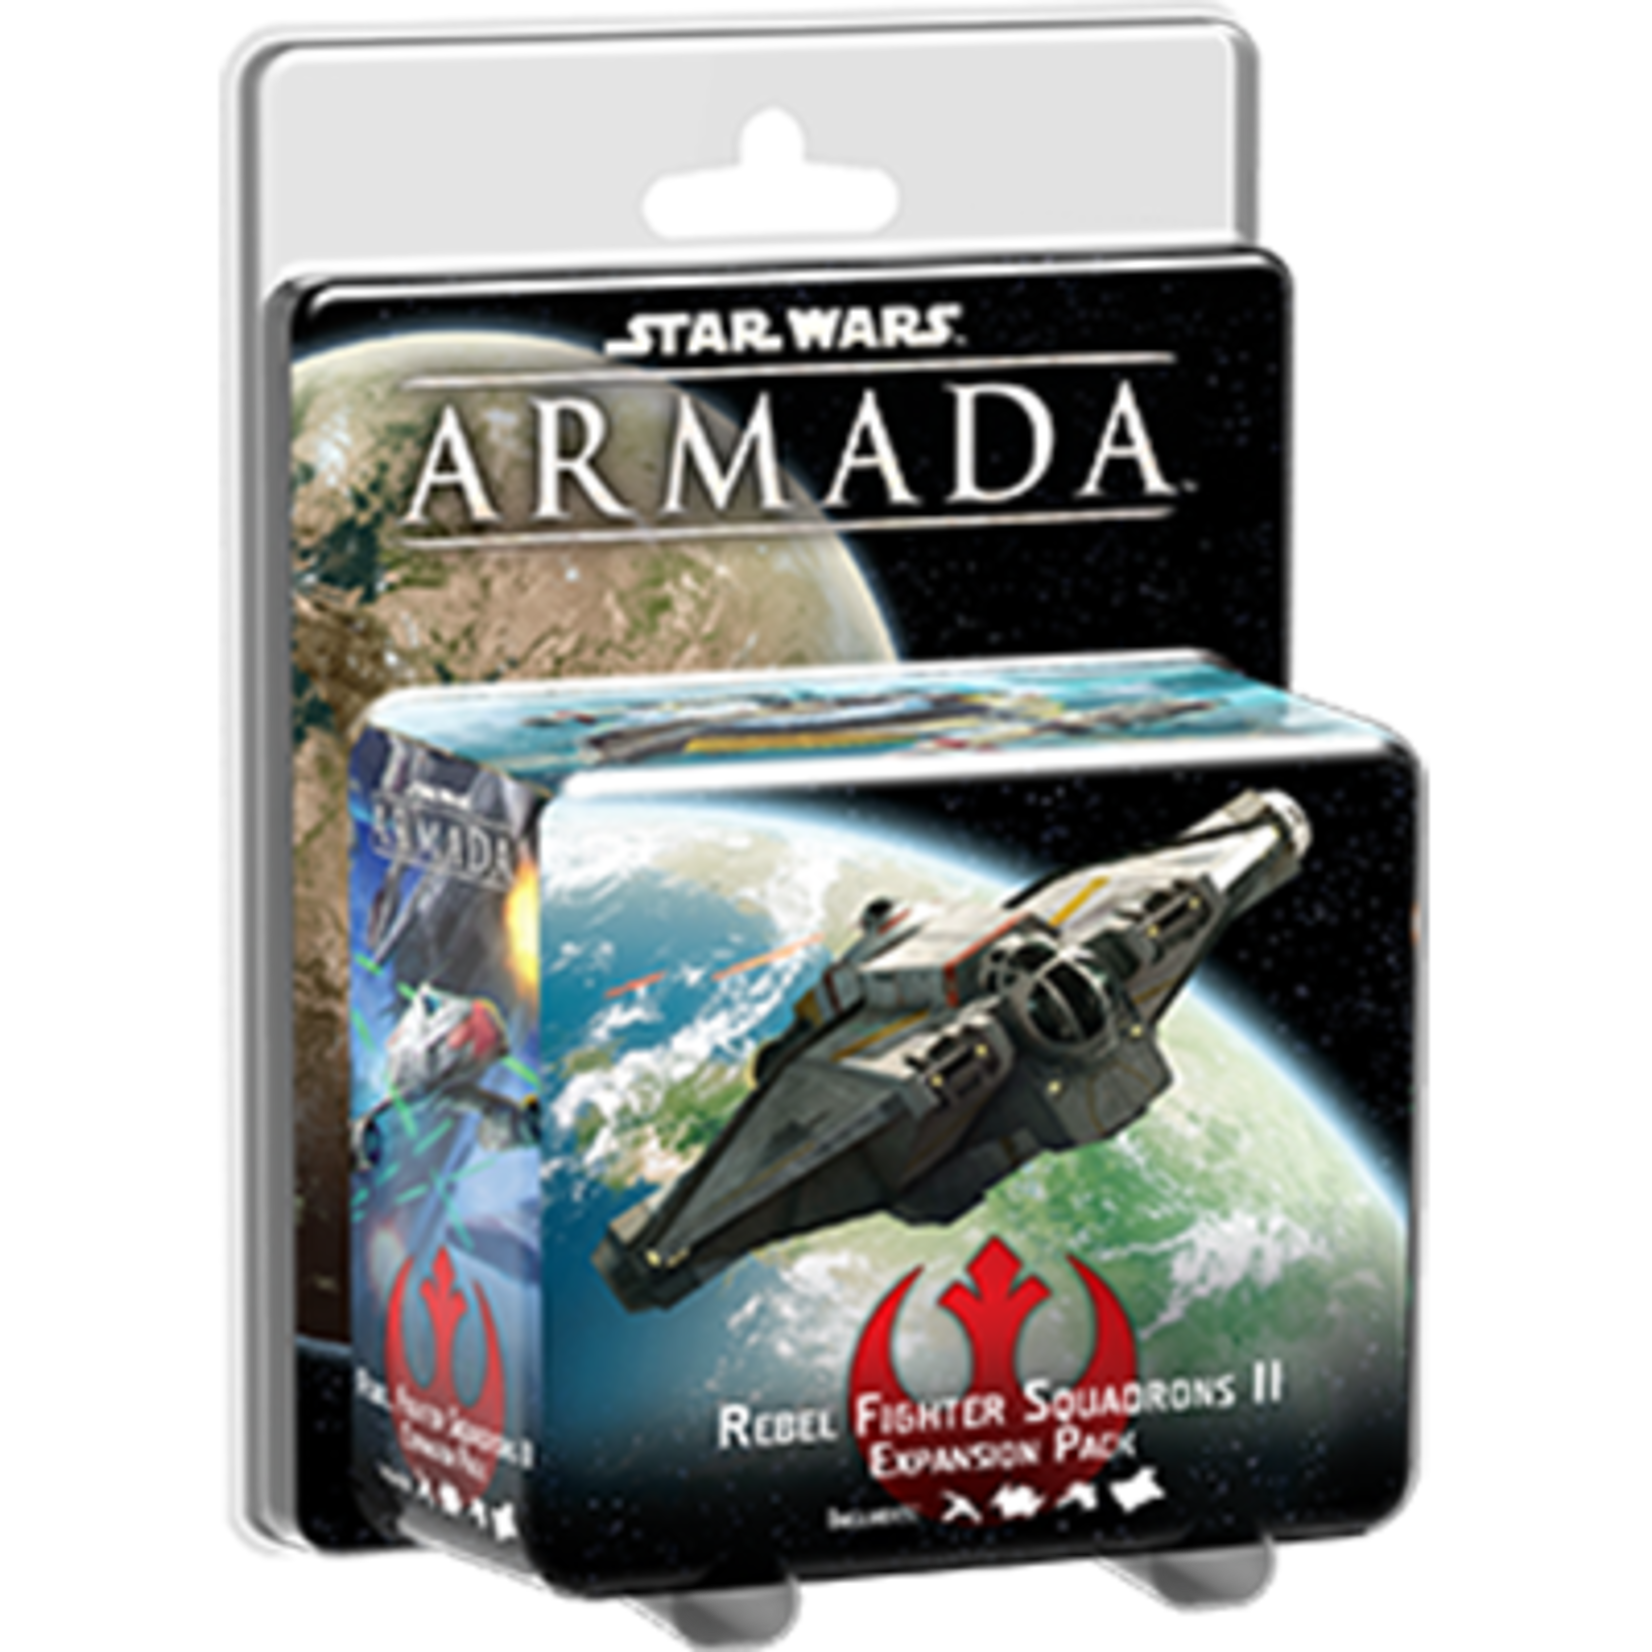 Star Wars Star Wars: Armada Rebel Fighter Squadrons 2